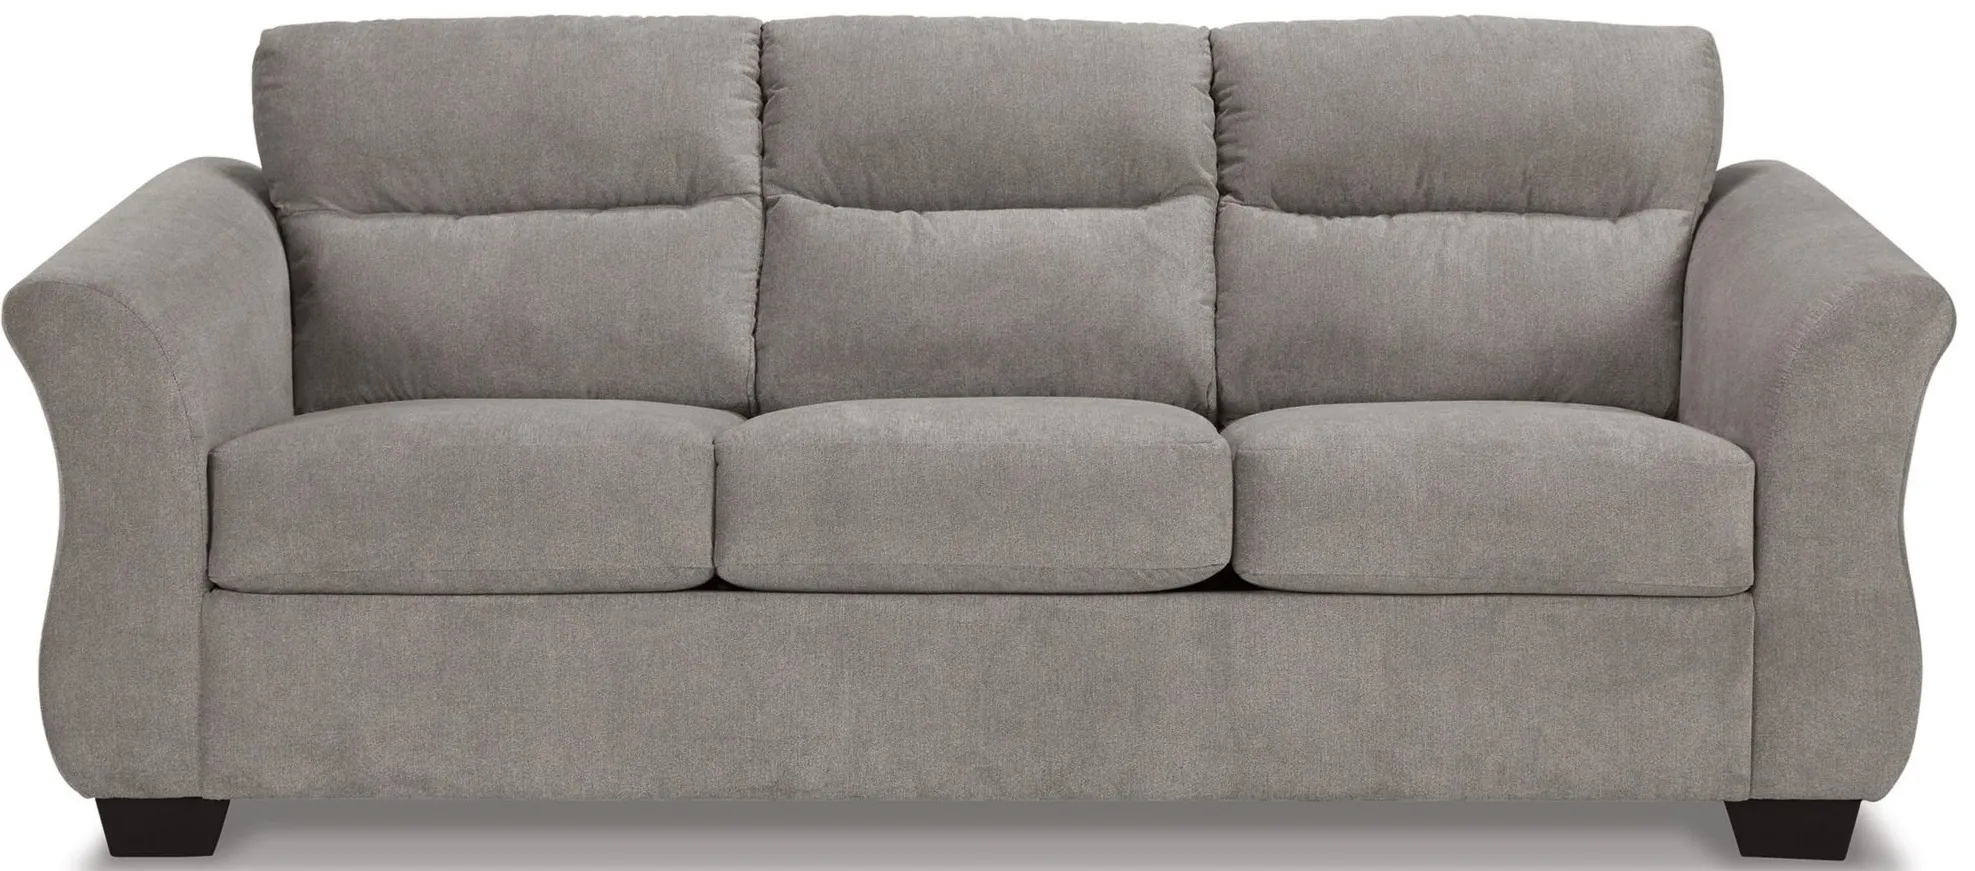 Miravel Sofa in Slate by Ashley Furniture